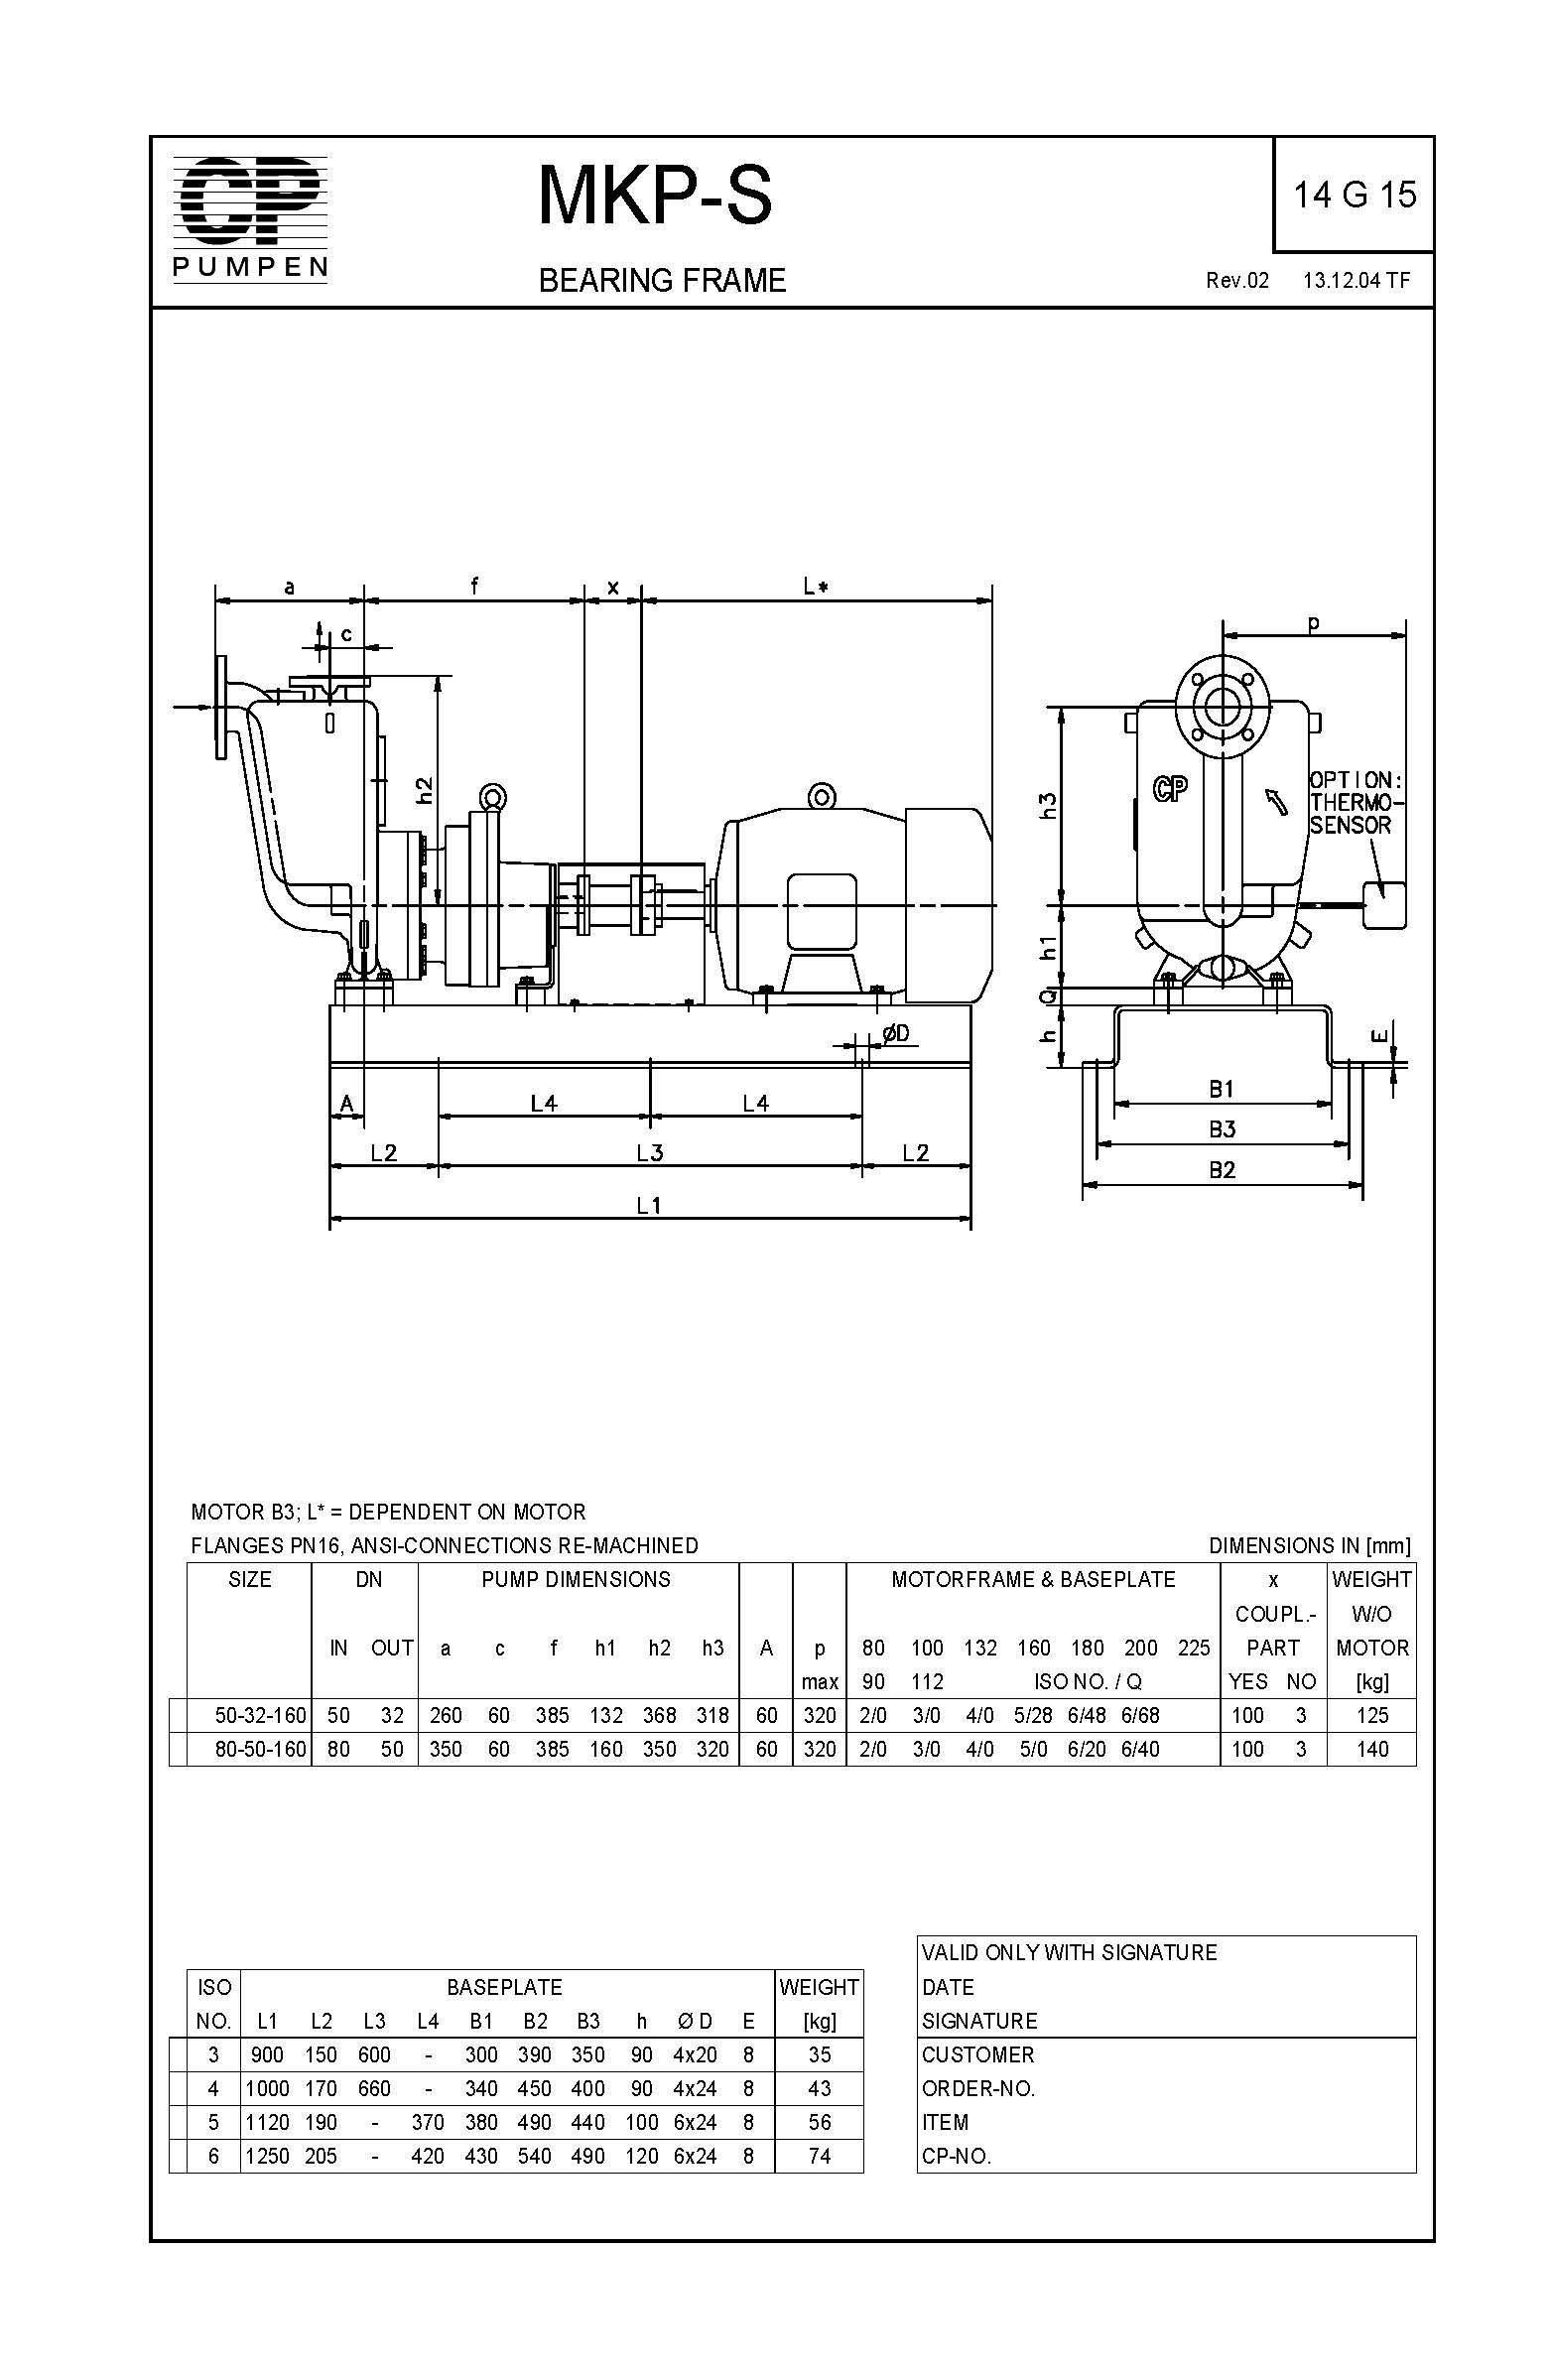 DimensionalDrawing MKP-S BearingFrame Baseplate Motor 14G15 Rev02